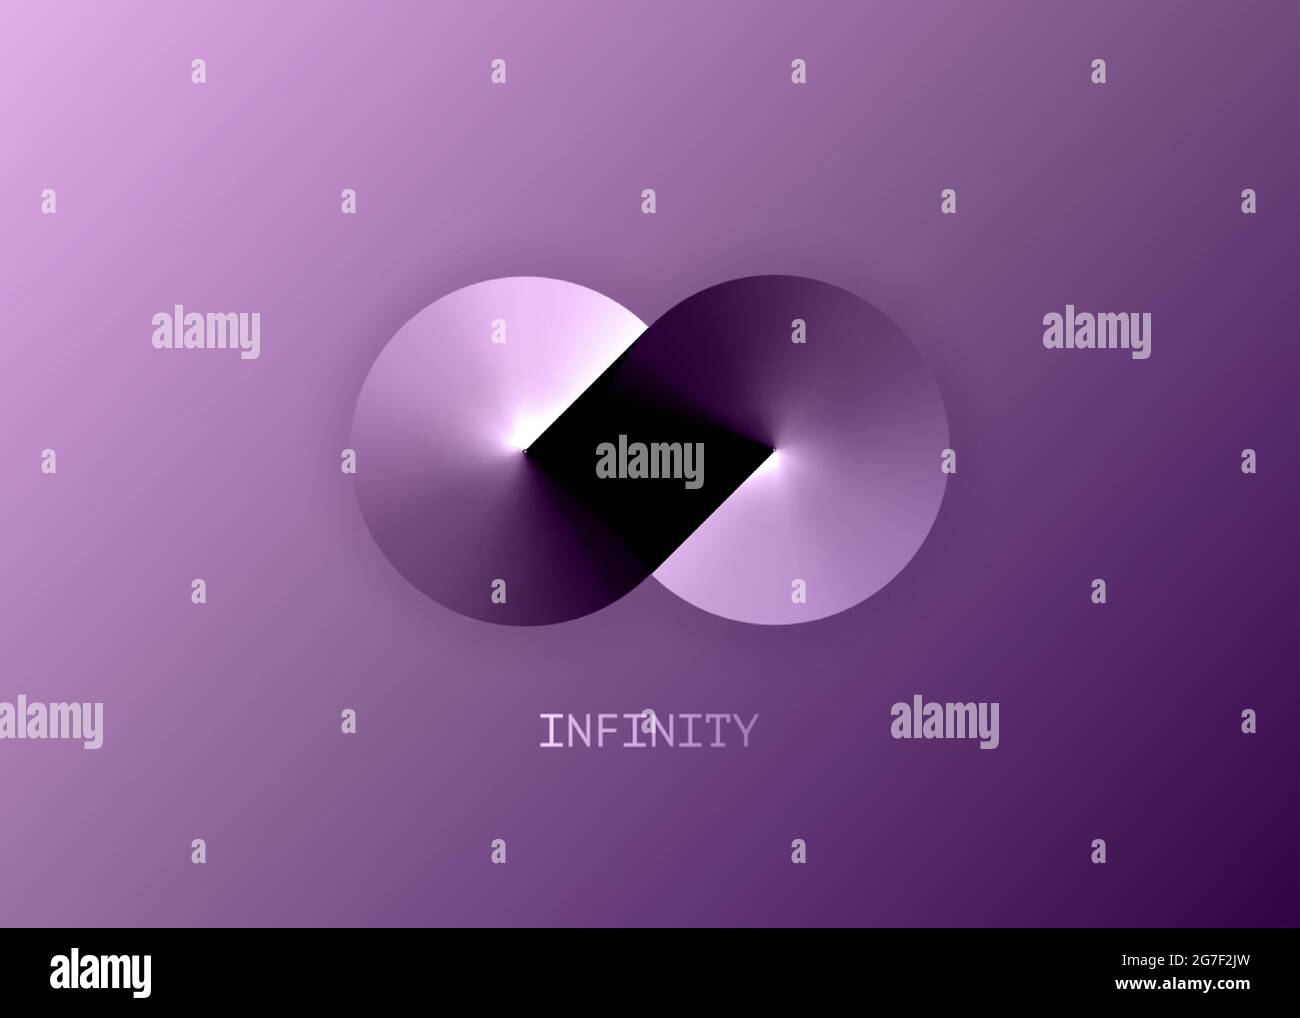 infinity business logo Template for your design. Eternity concept in metallic gradient color, abstract metallic sign violet spectrum icon, Metal loop Stock Vector